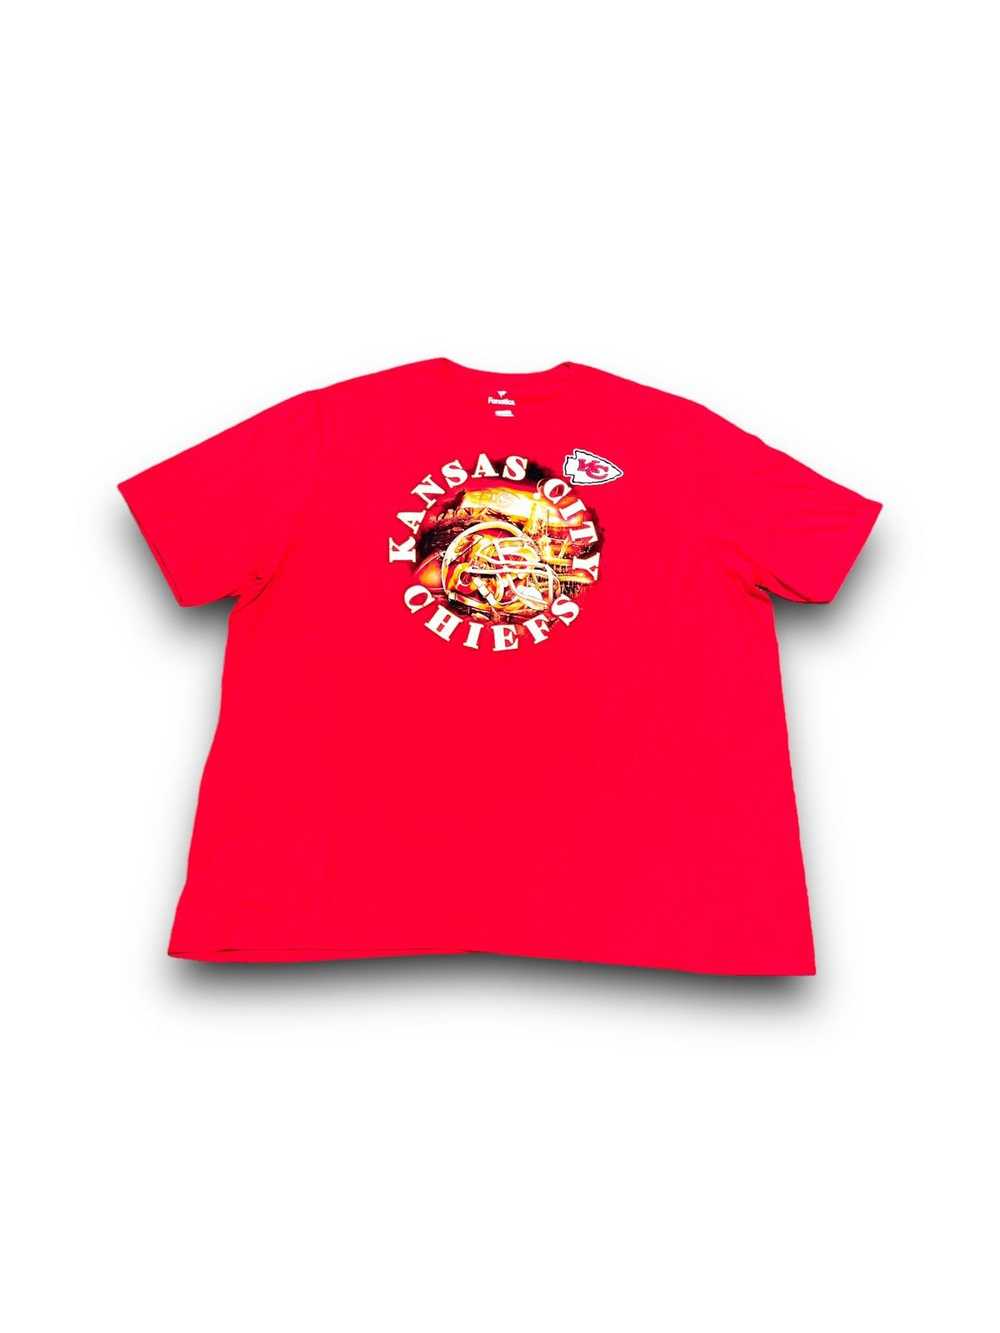 NFL Kansas City chiefs t-shirt size 4XL - image 2